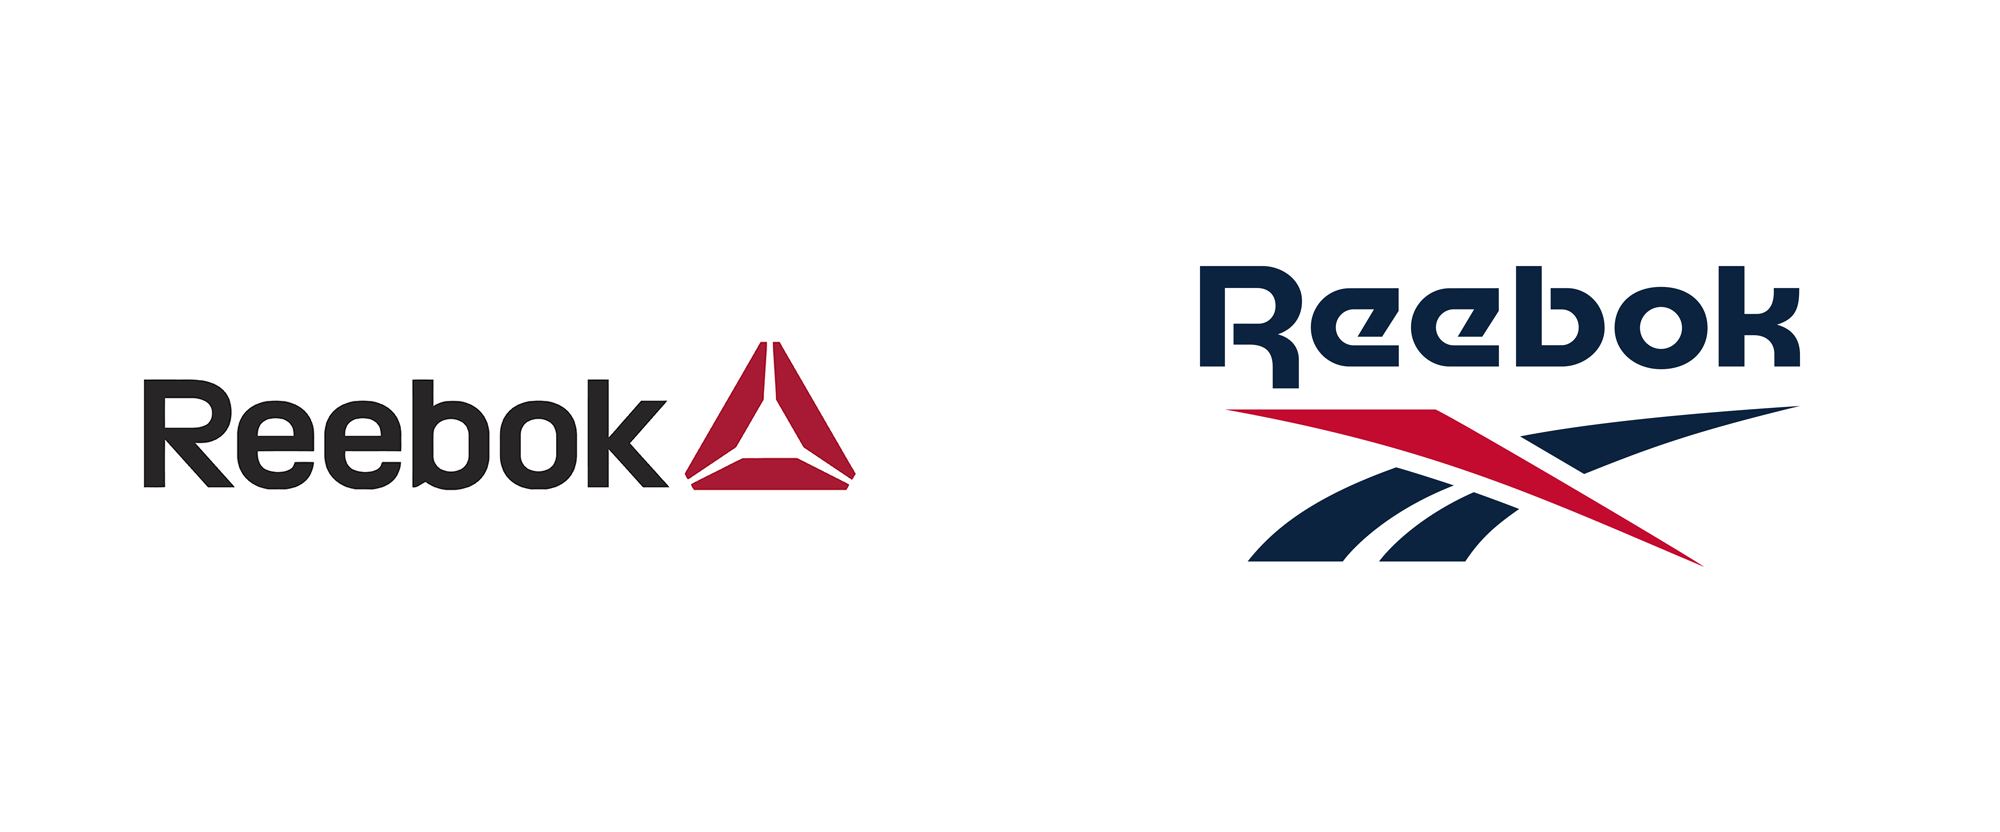 reebok logo history